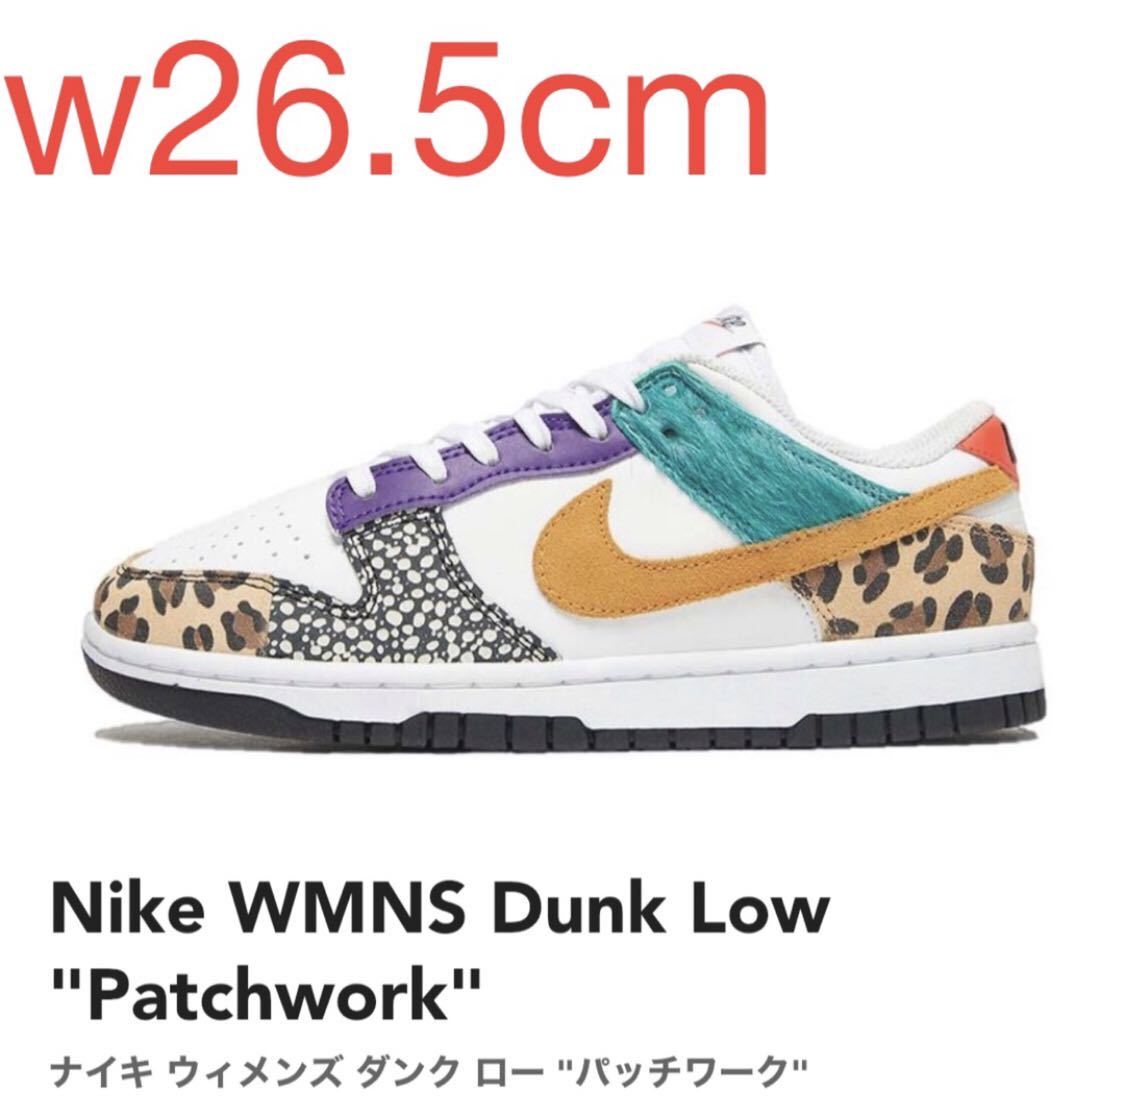 Nike WMNS Dunk Low Patchwork ナイキ ウィメンズ ダンク ロー パッチ